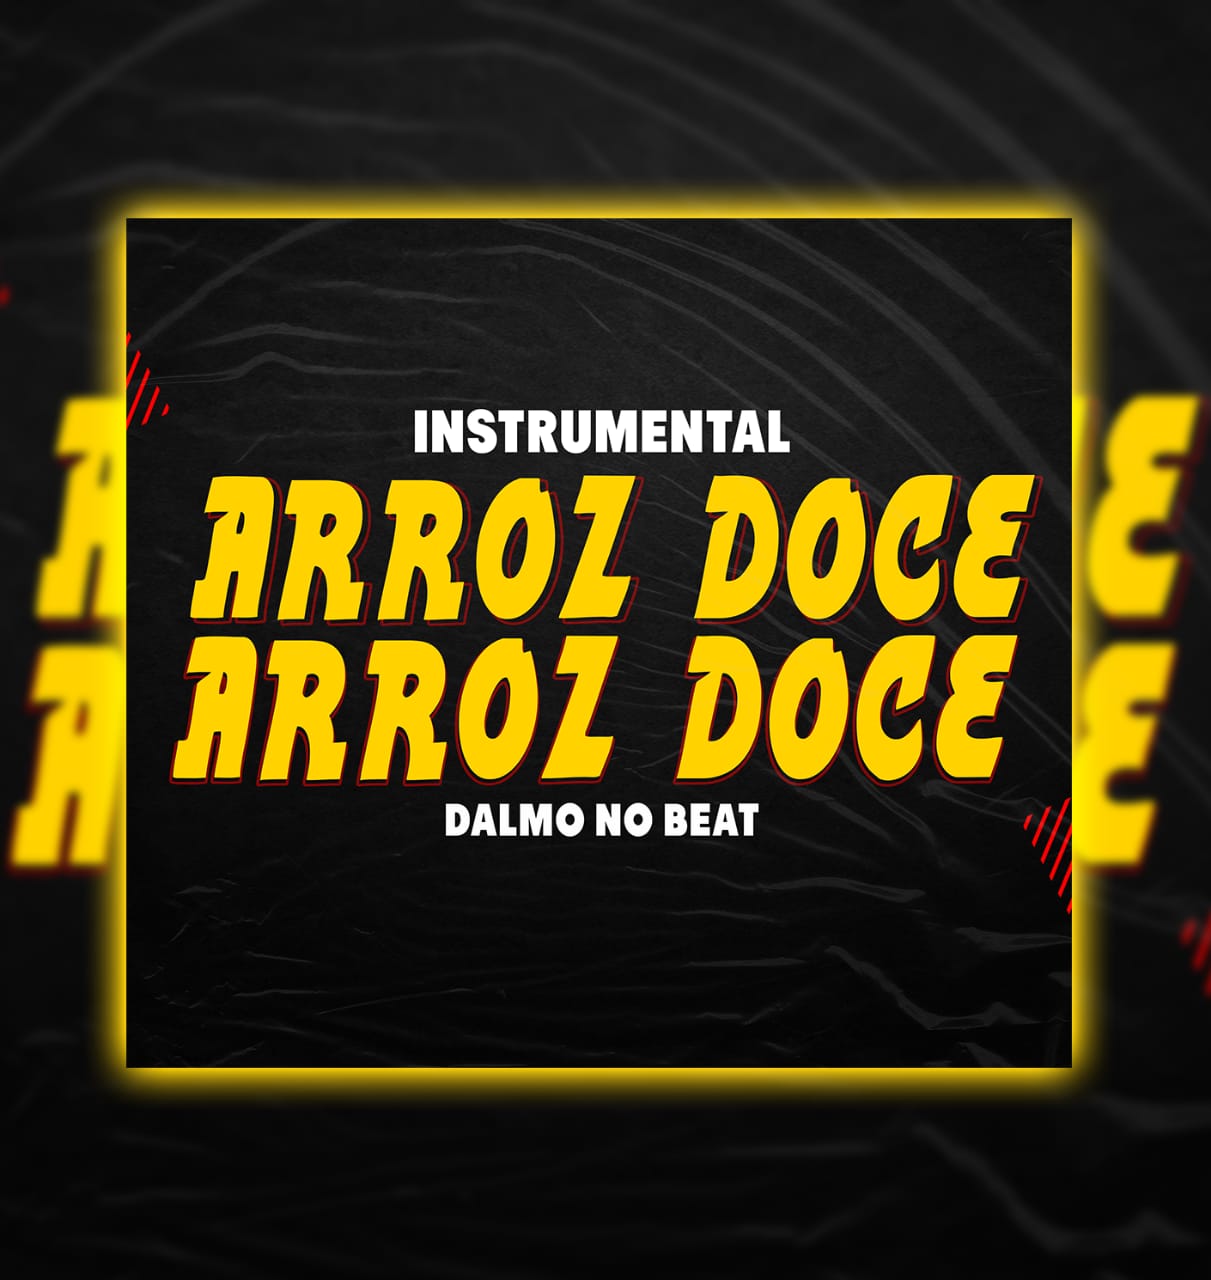 Dalmo No Beat - Arroz Doçe Instrumental de Afro House mp3 download